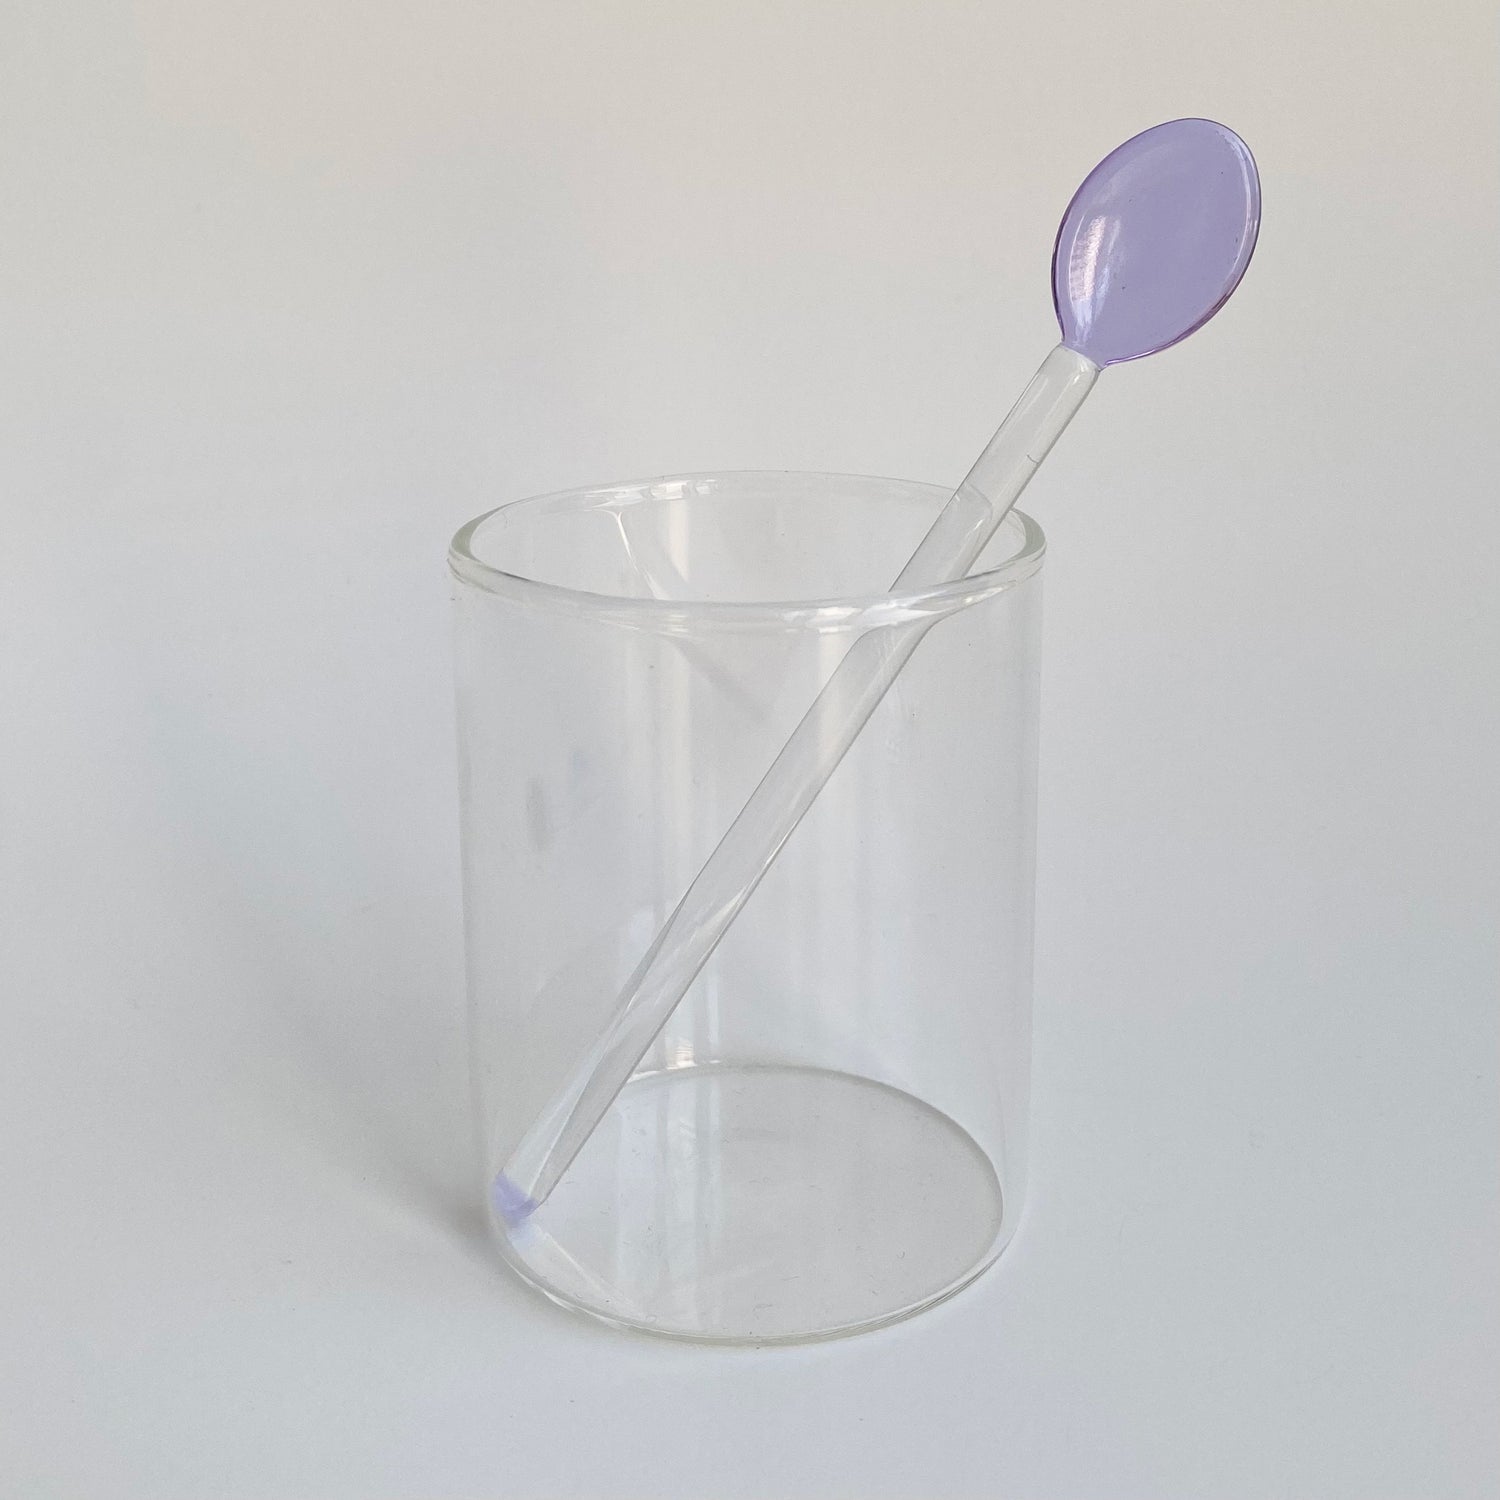 Glass Spoon & Coffee Stirrer in purple